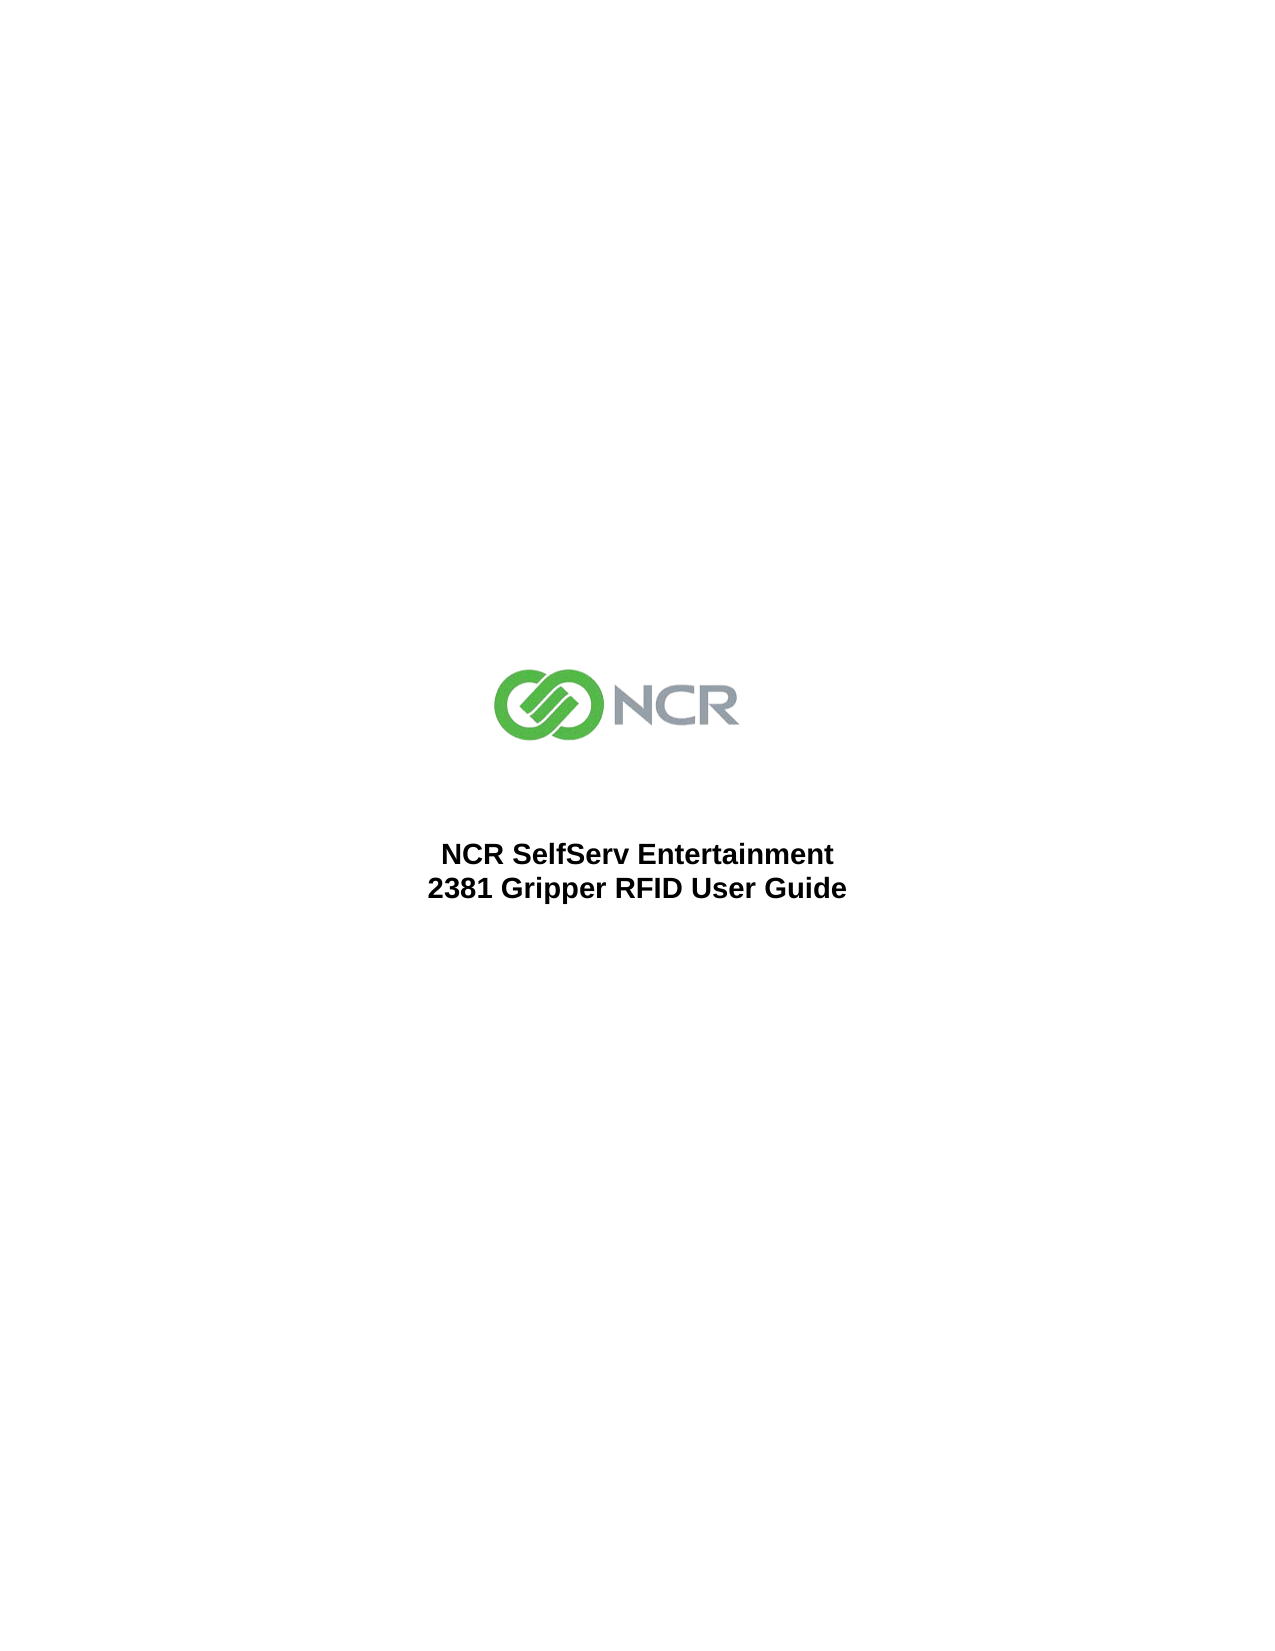                             NCR SelfServ Entertainment 2381 Gripper RFID User Guide 